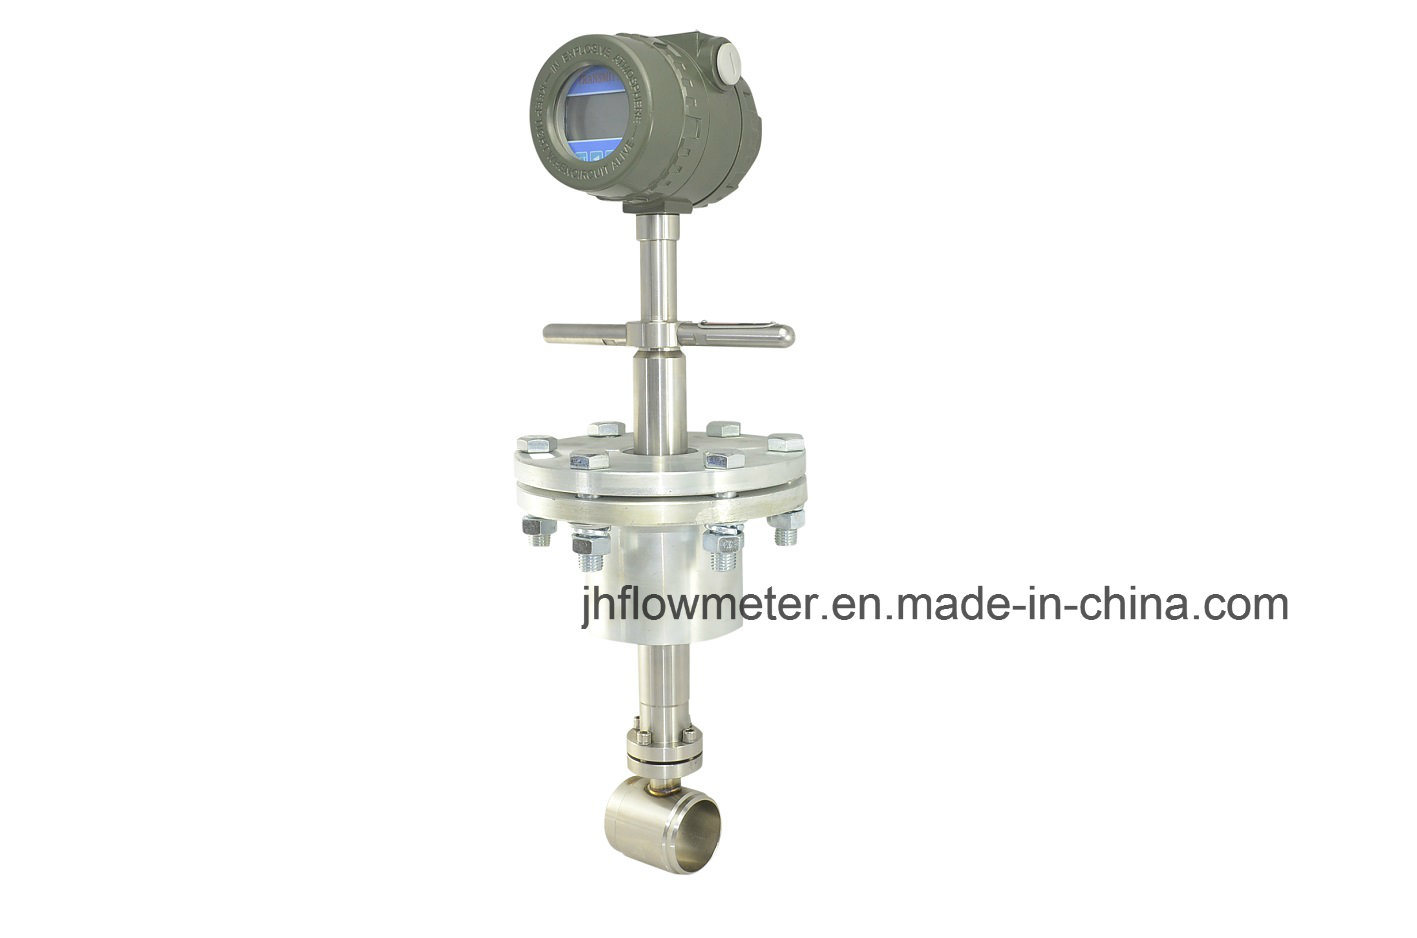 Hot Sales Insertion Type Vortex Flow Meter for Gas Steam and Liquid (JH-VFM-IN)